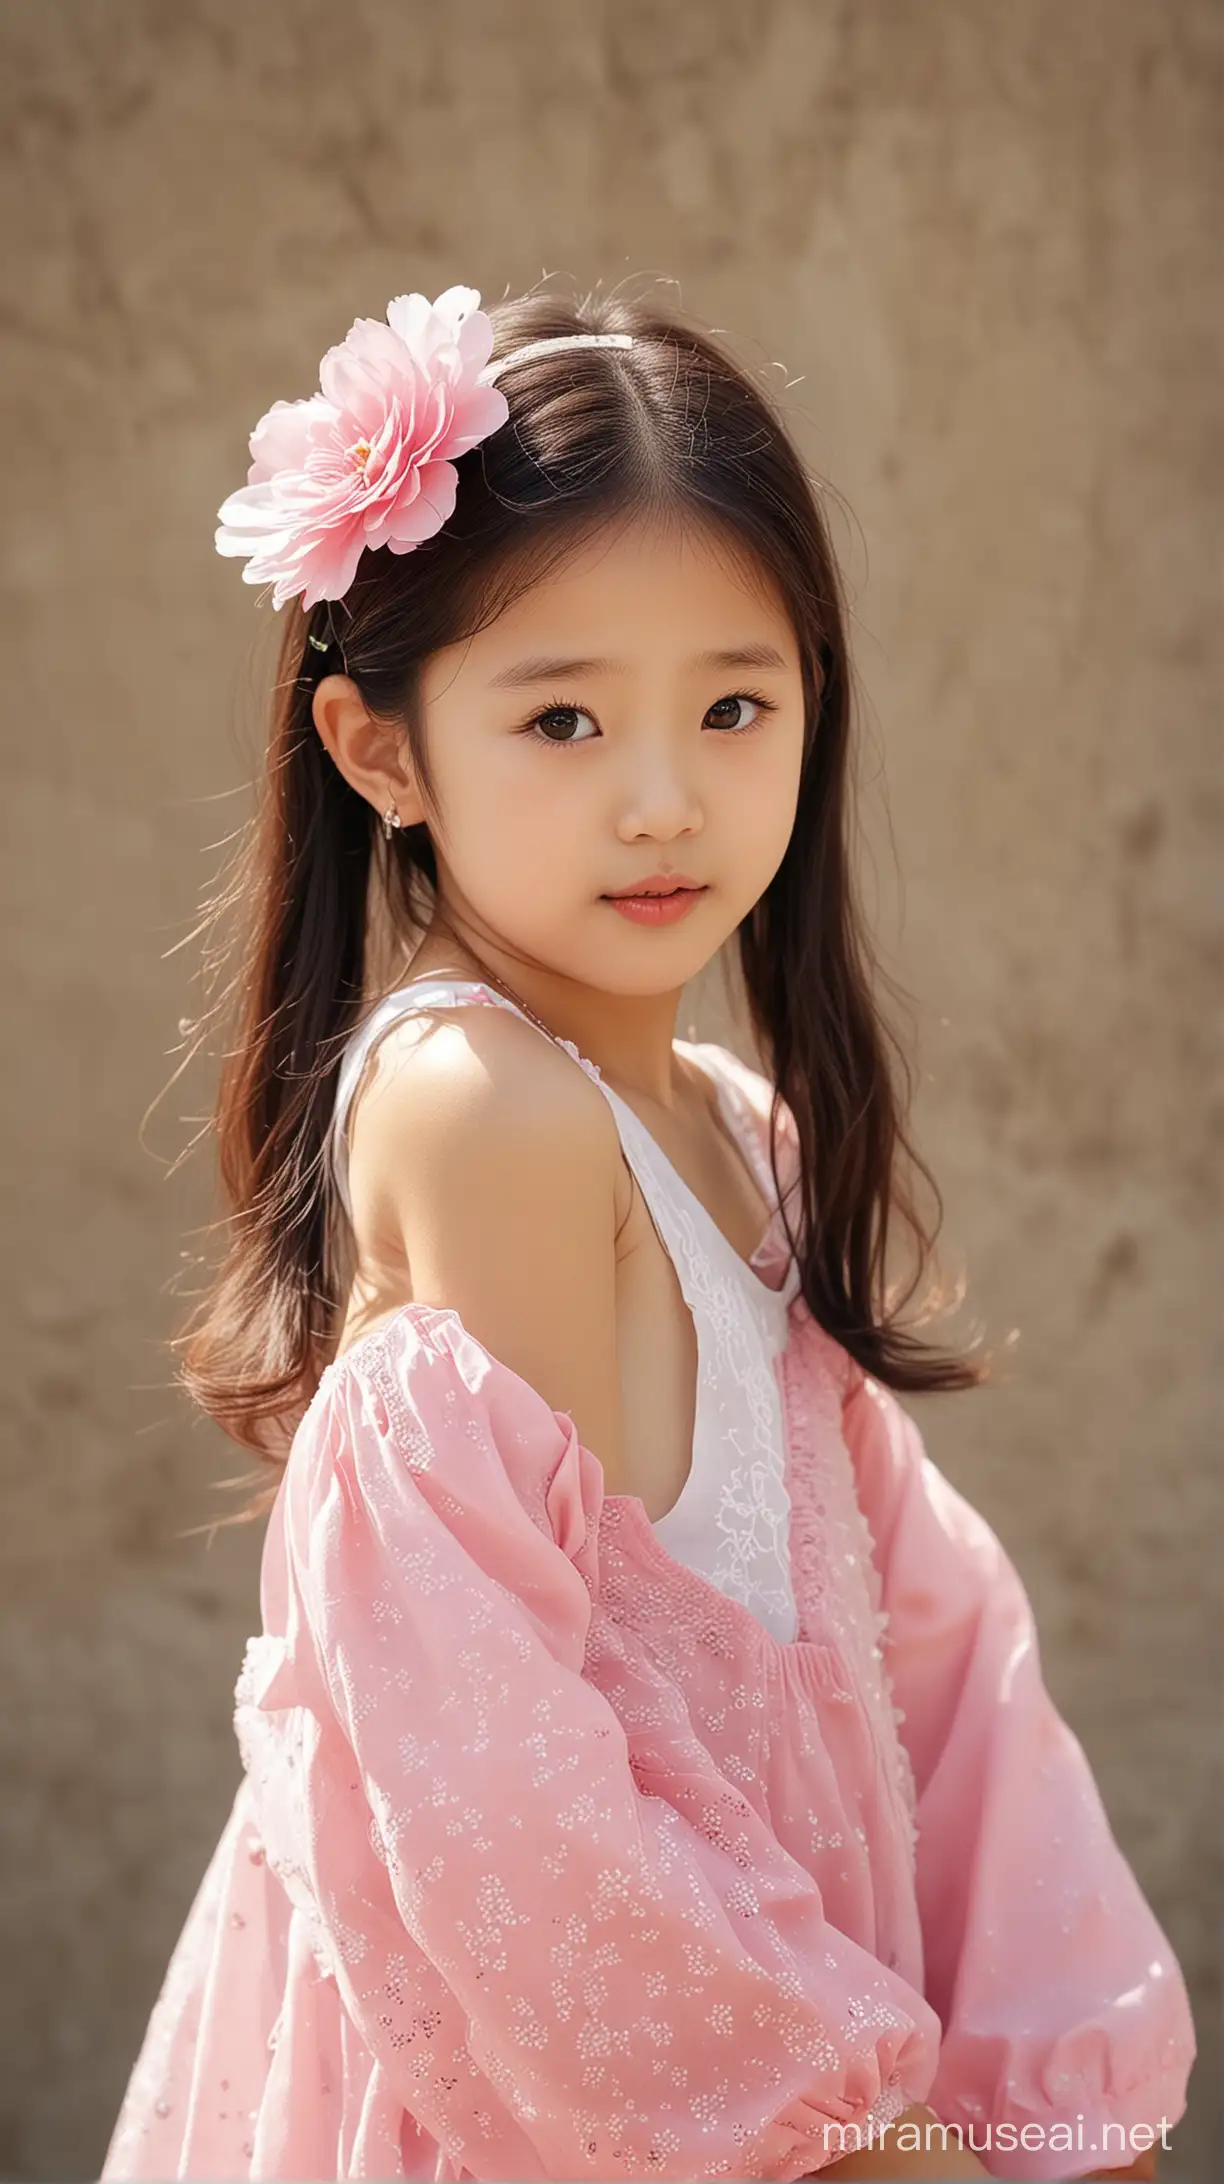 Adorable Korean Little Girl Enjoying Childhood Moments